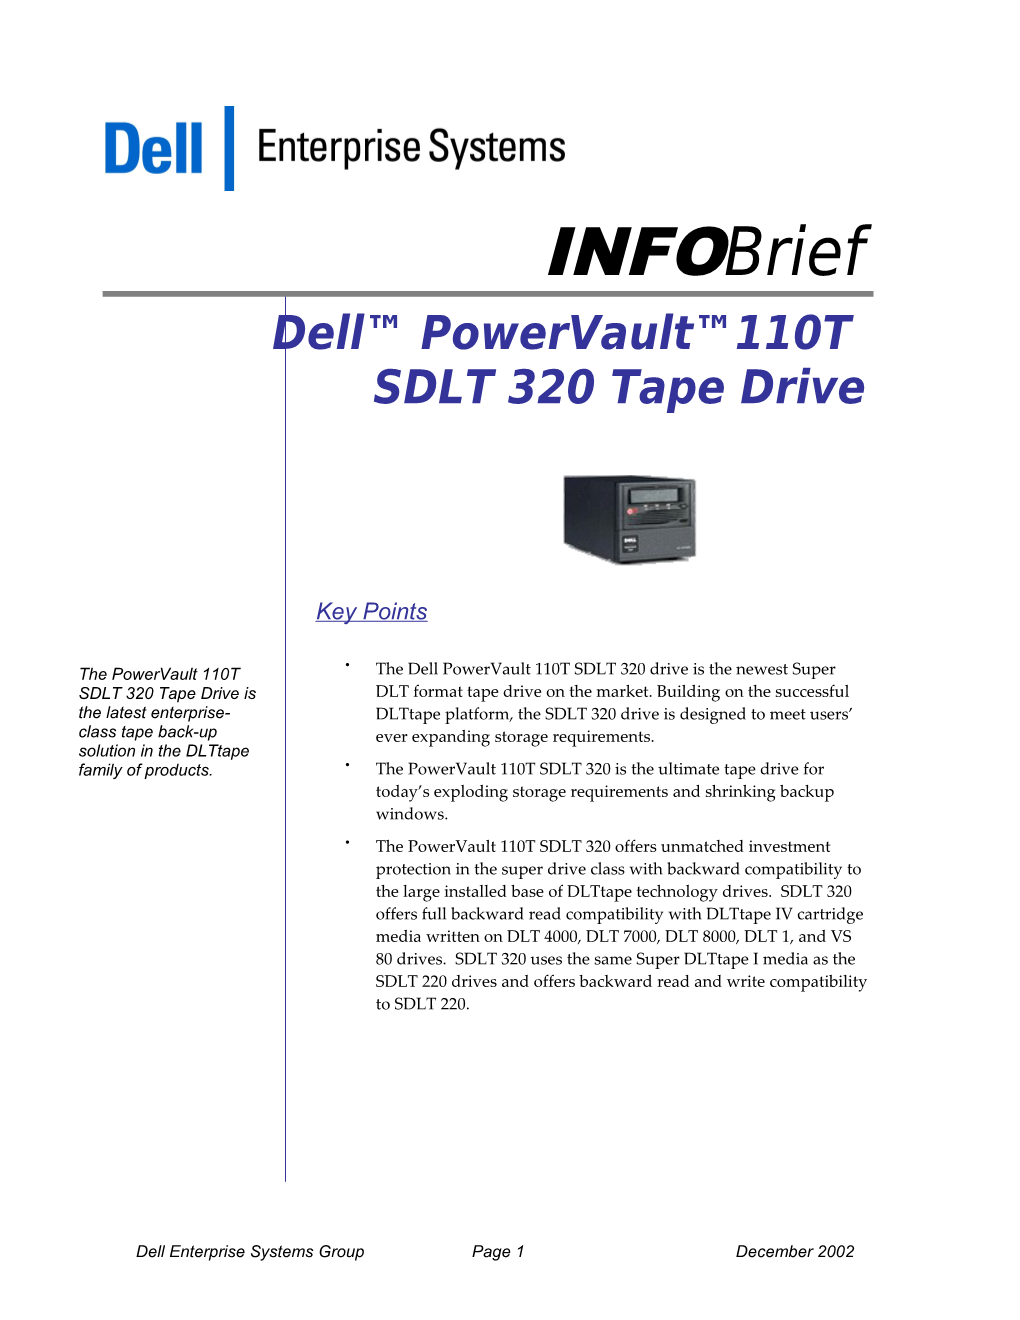 Powervault 110T SDLT 320 Infobrief